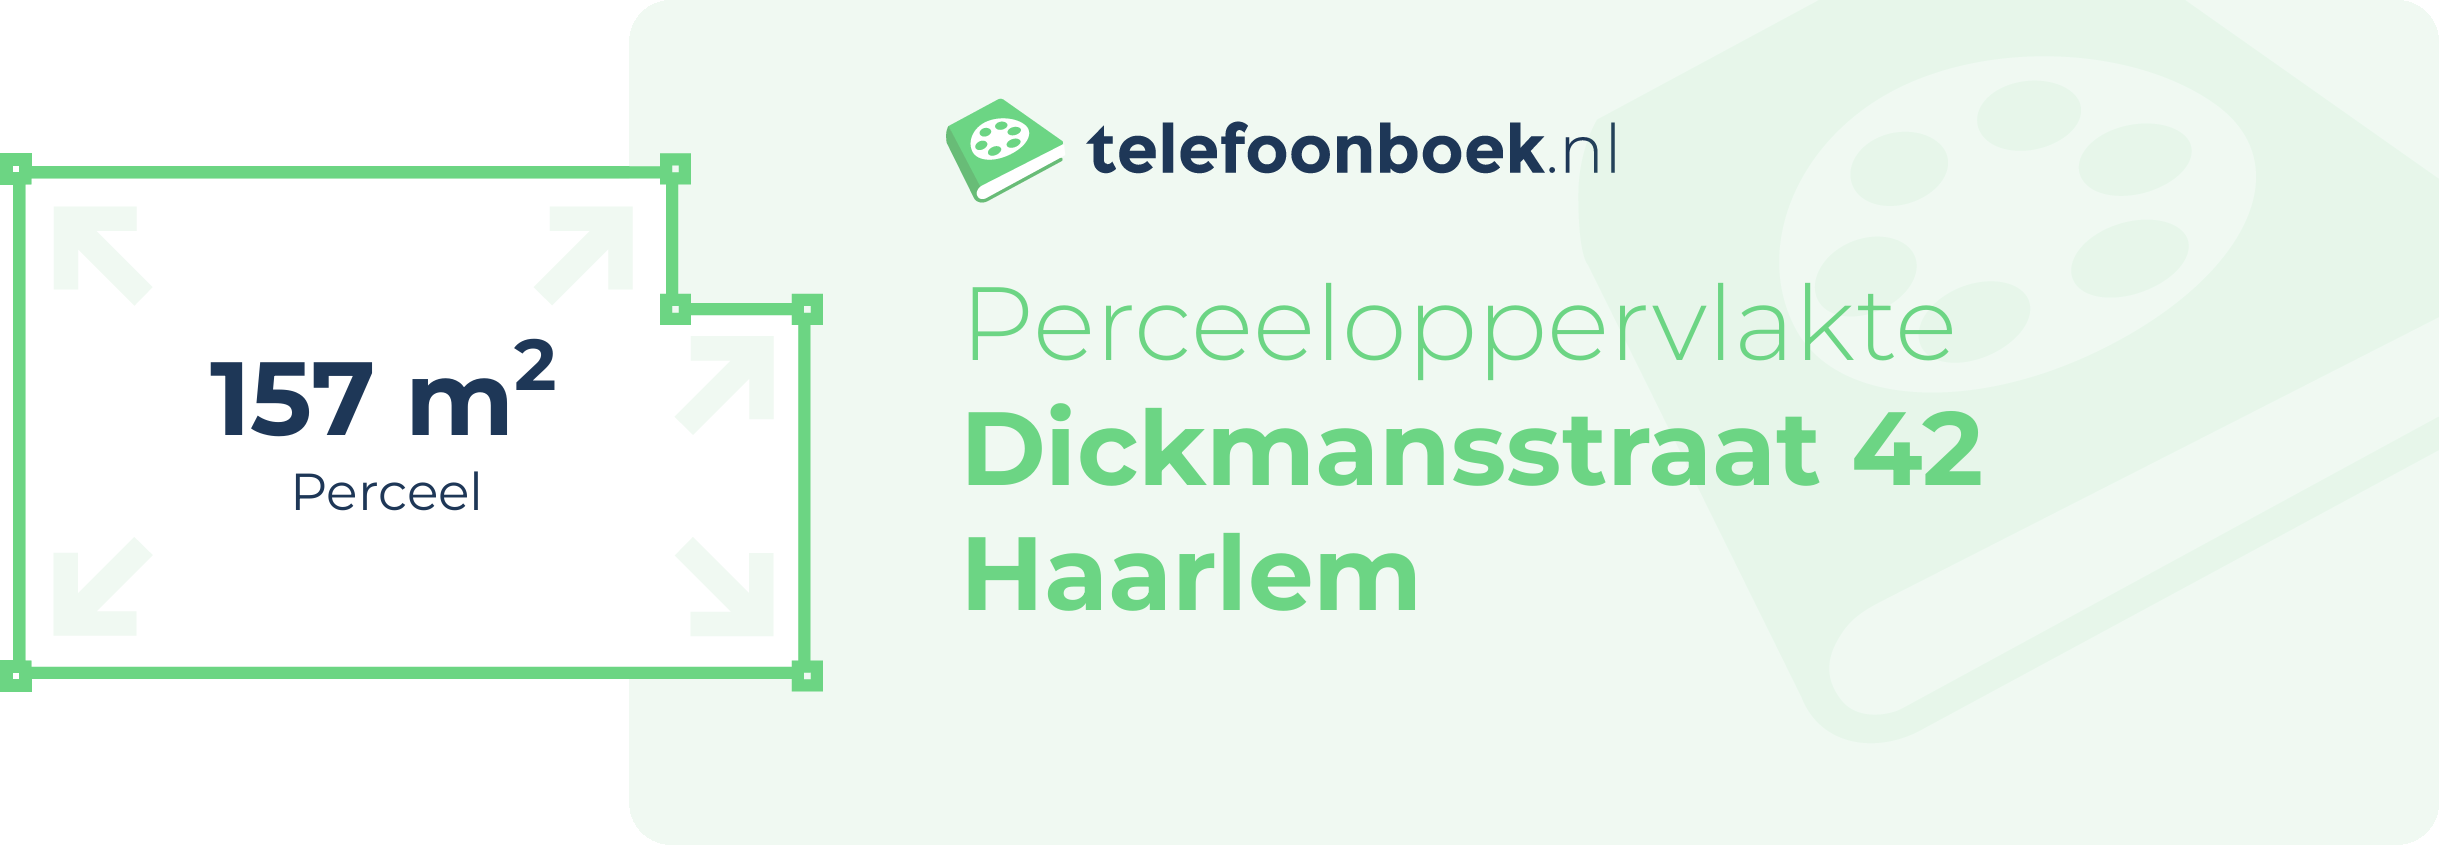 Perceeloppervlakte Dickmansstraat 42 Haarlem